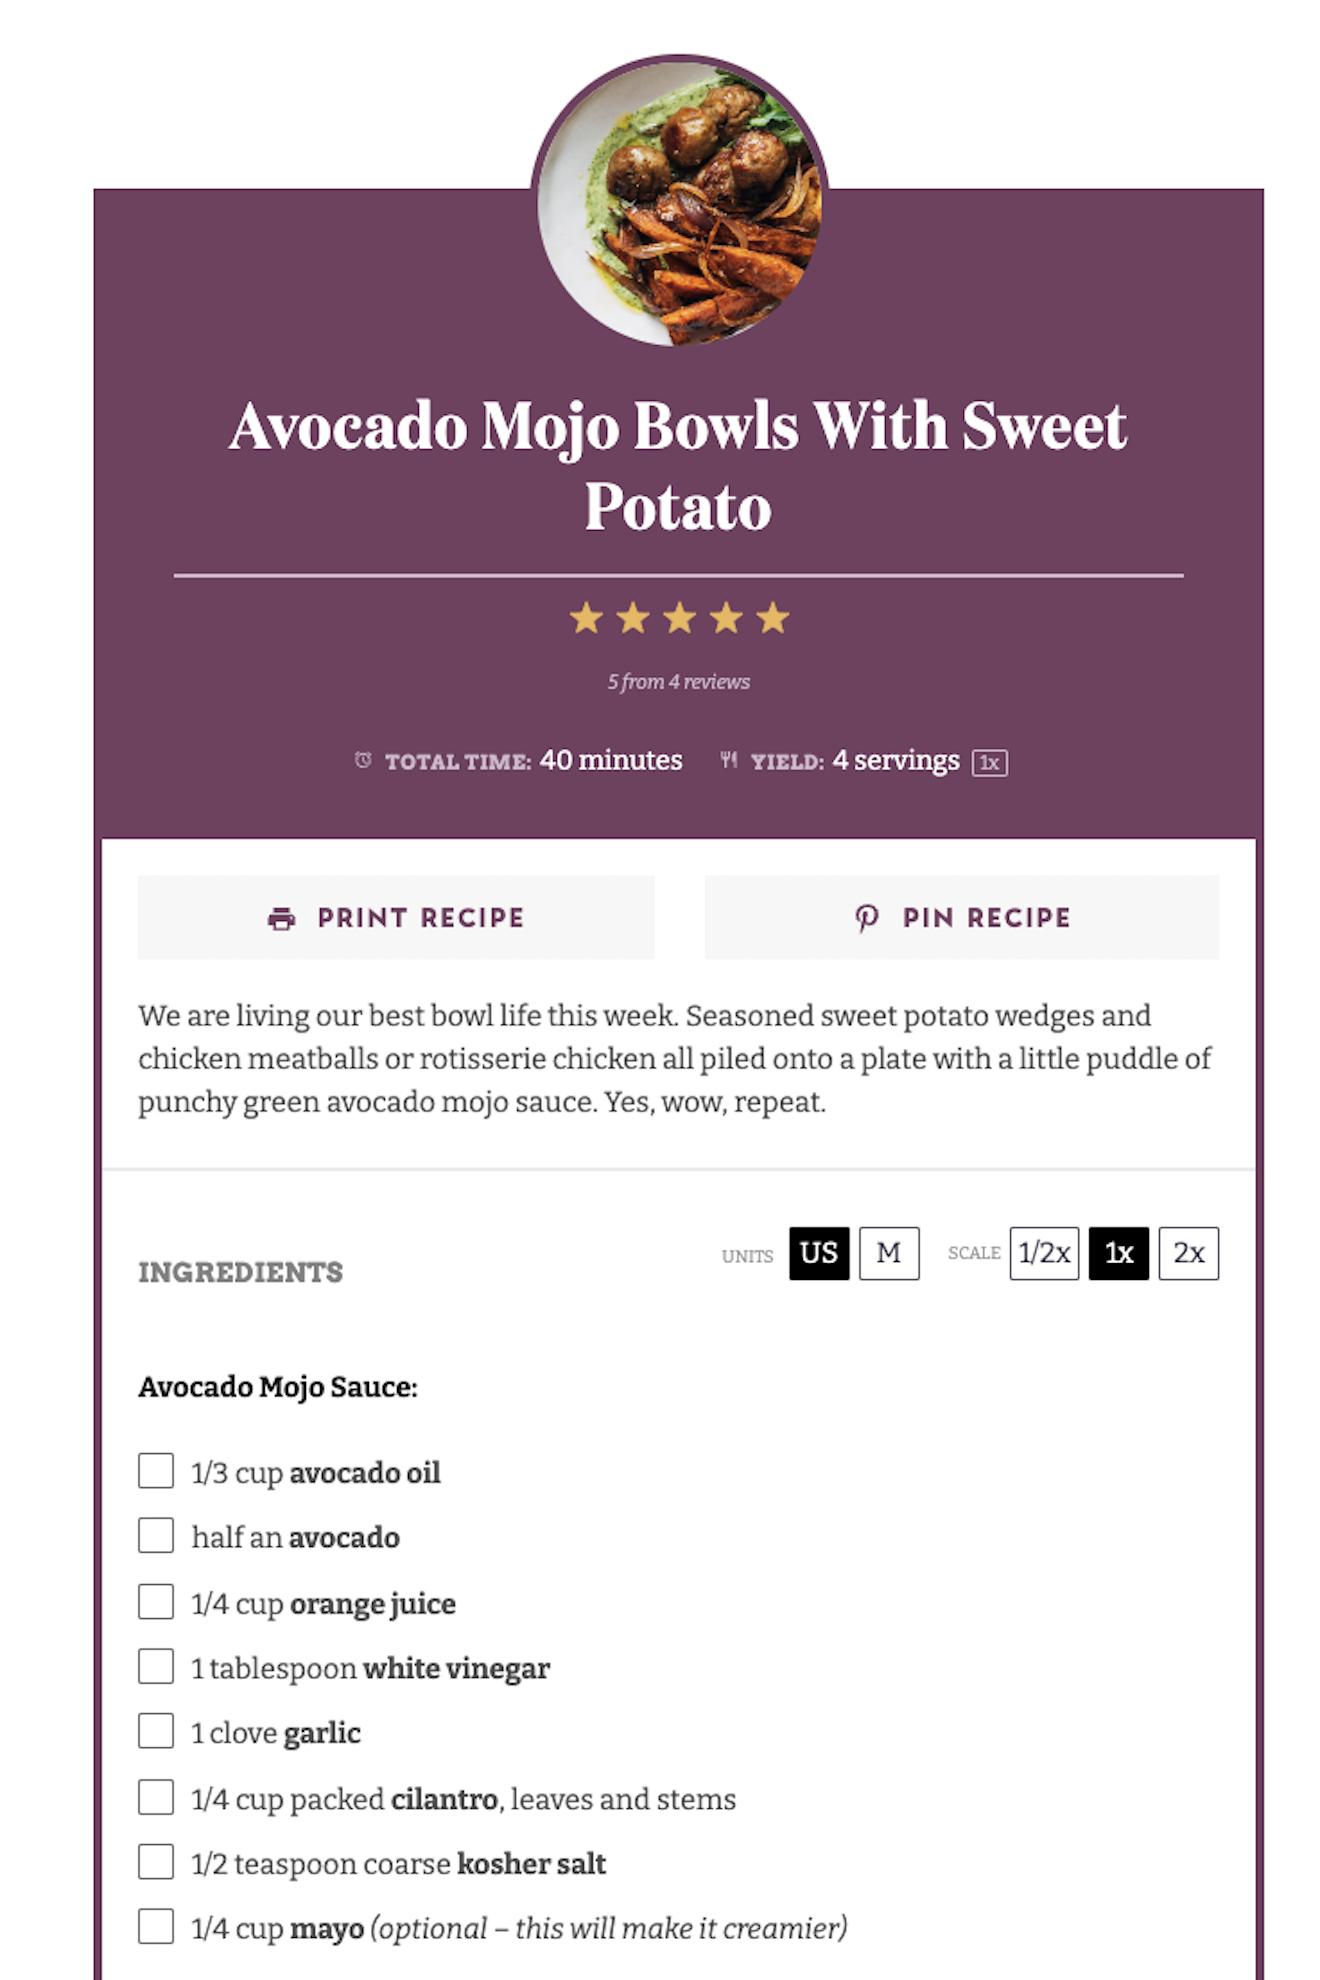 Avocado Mojo菜谱卡 和甜土豆碗